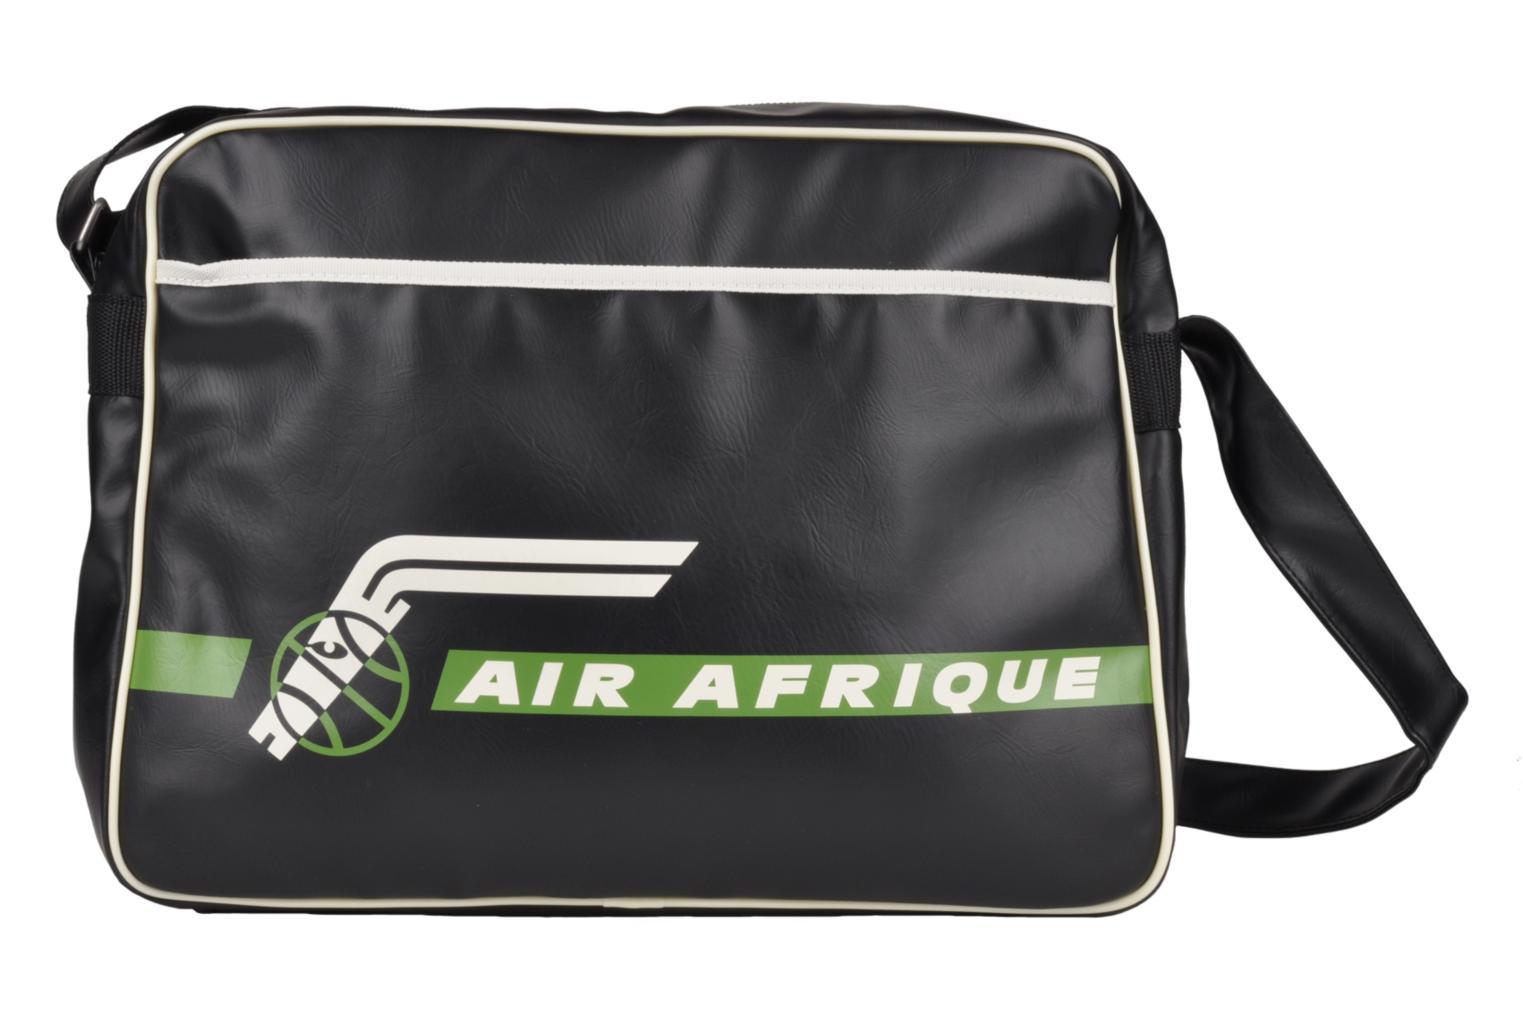 Foto City bags Logoshirt Air Afrique Bolsos y complementos